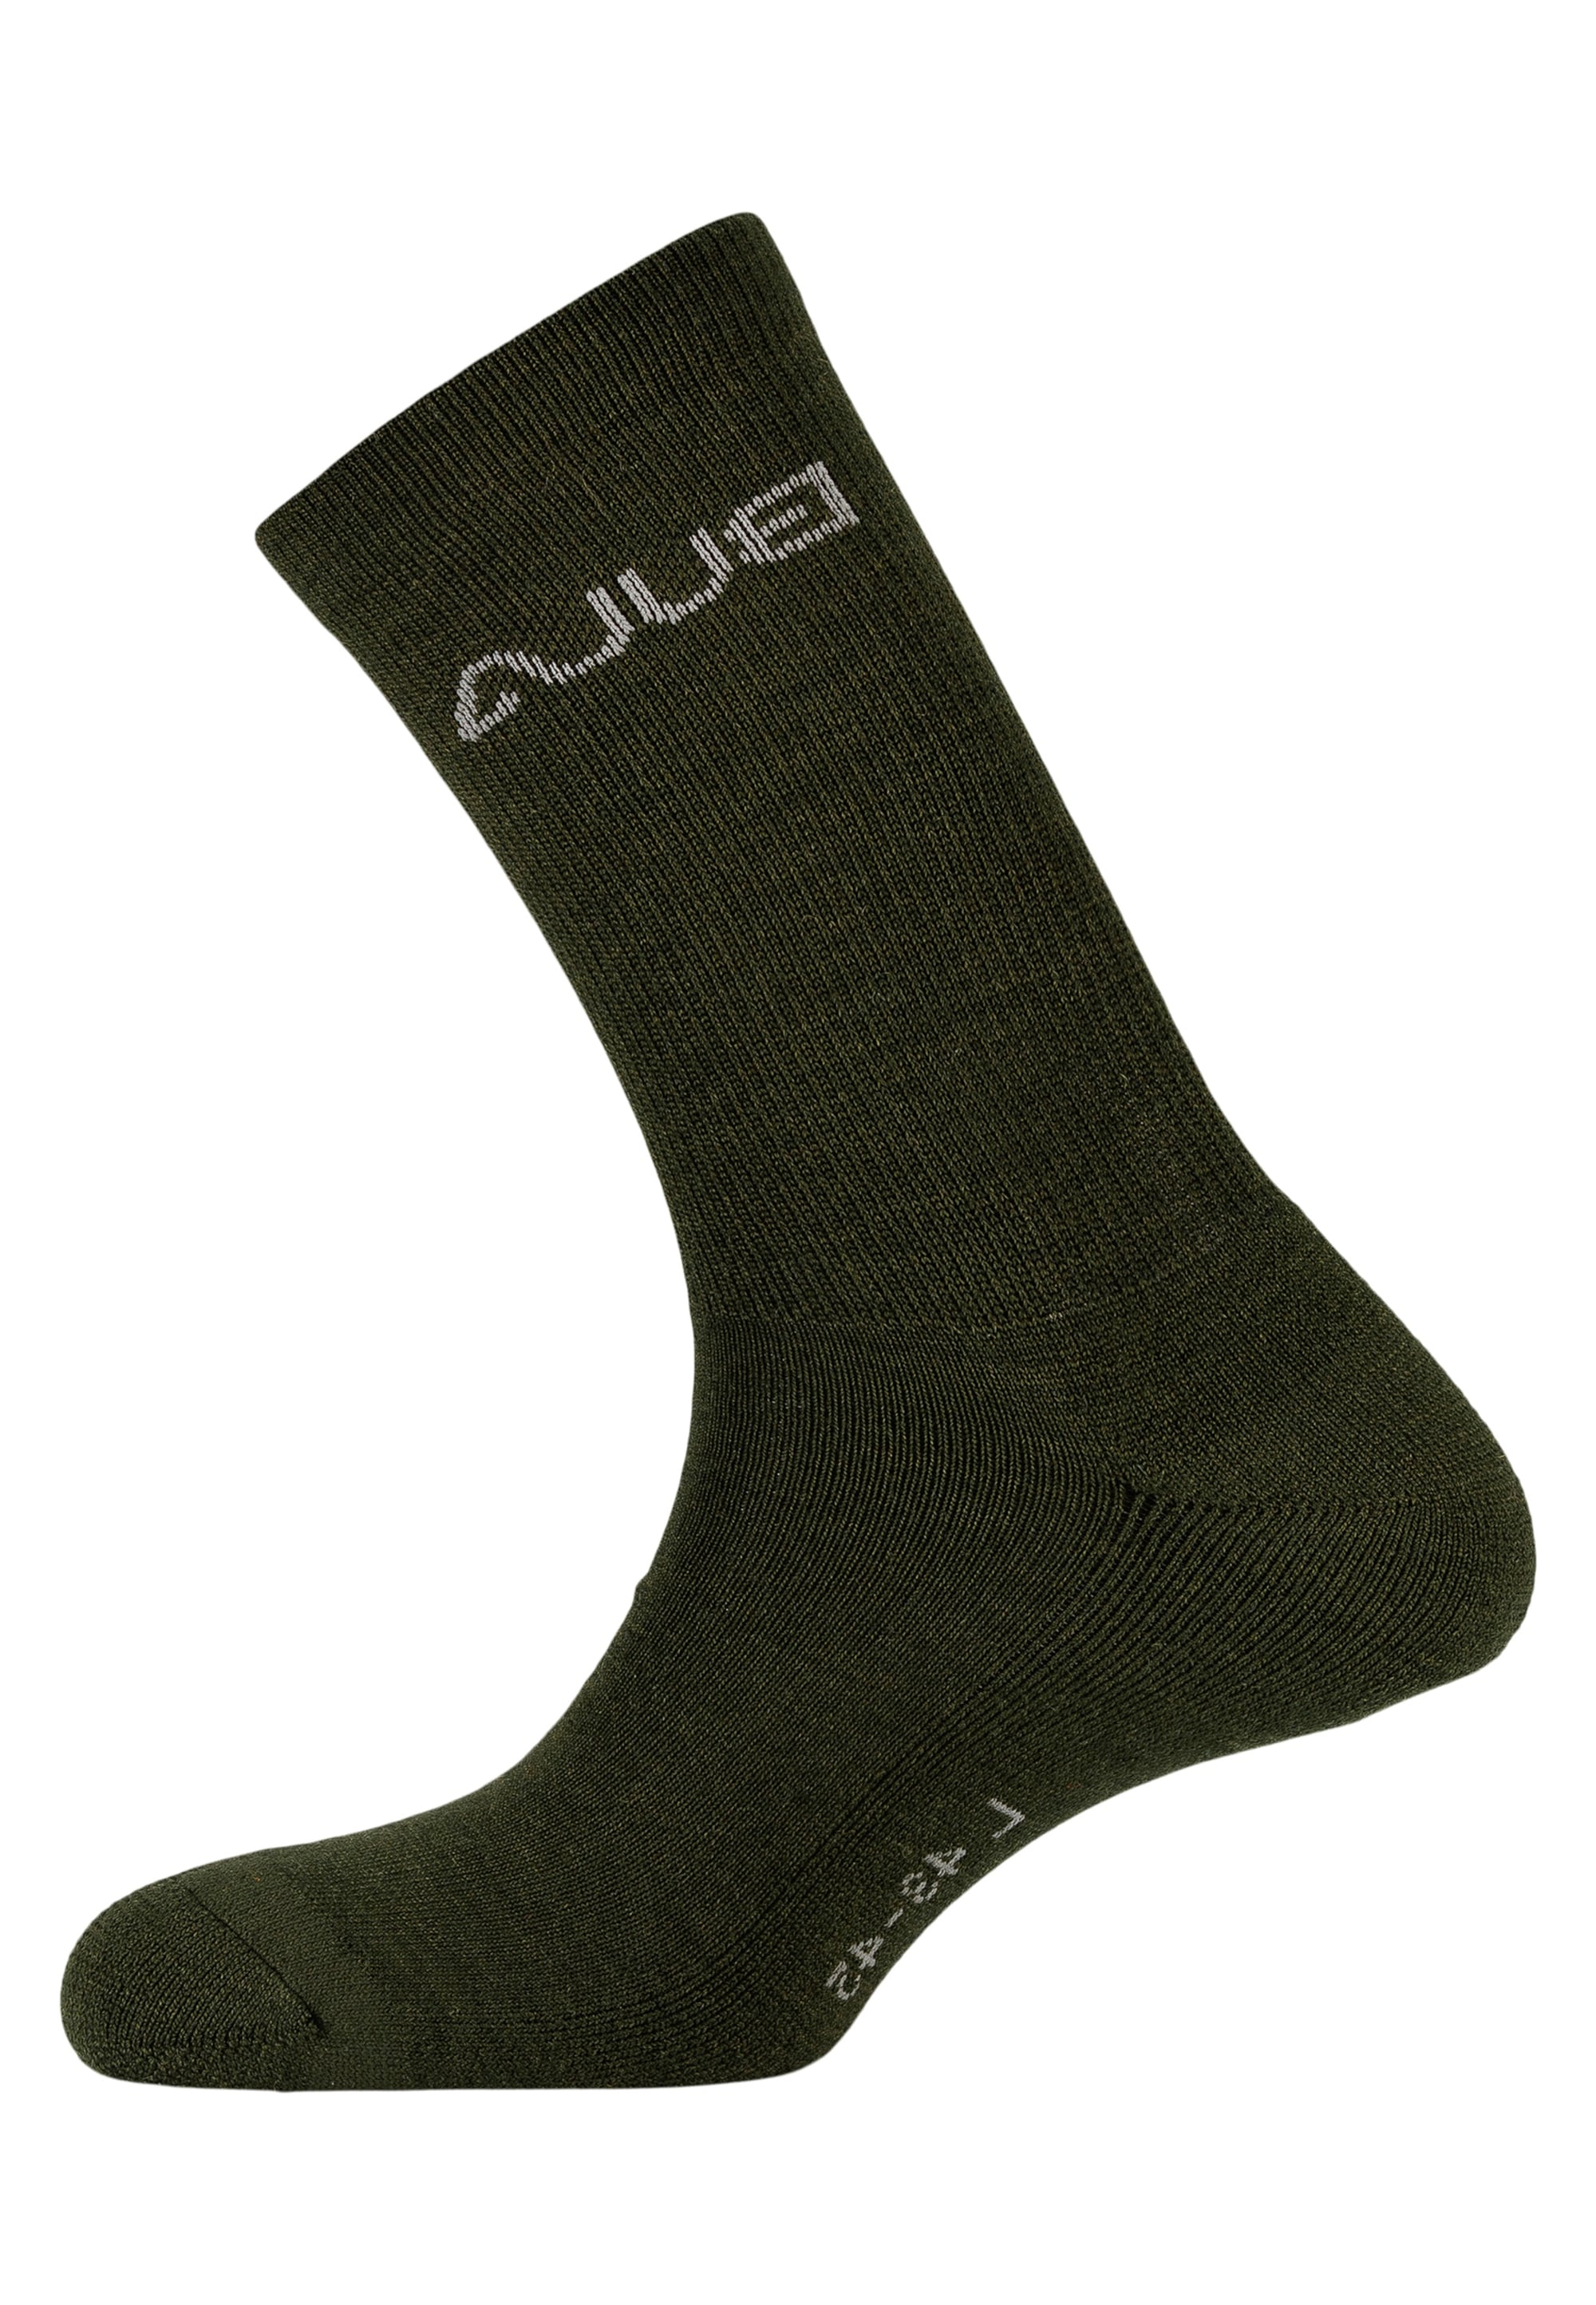 BULA Socken, im praktischen 2er-Pack